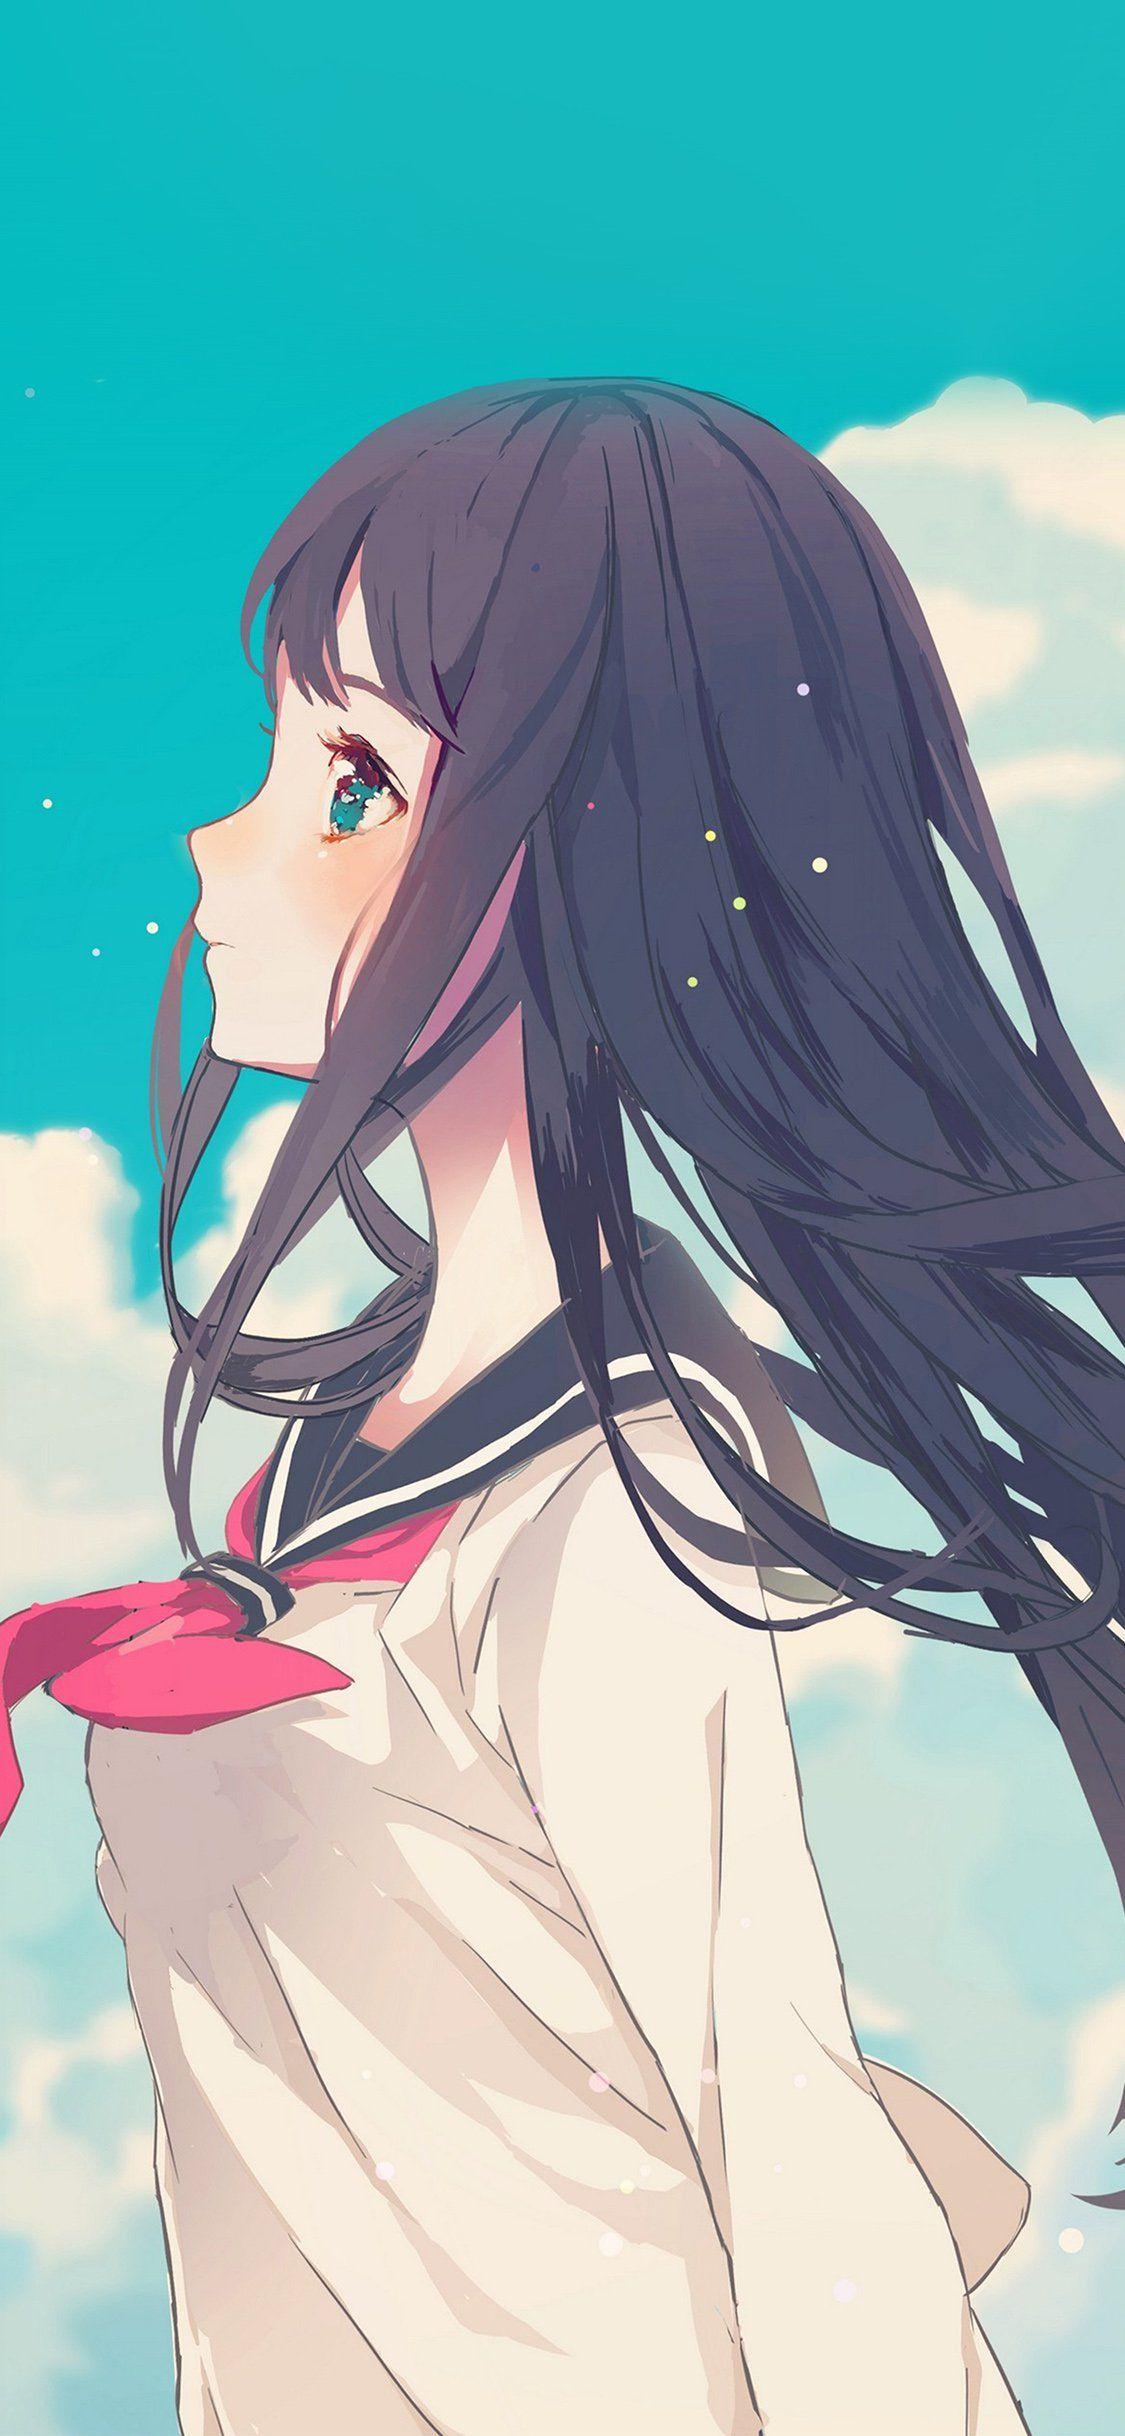 Anime Girl iPhone Wallpapers